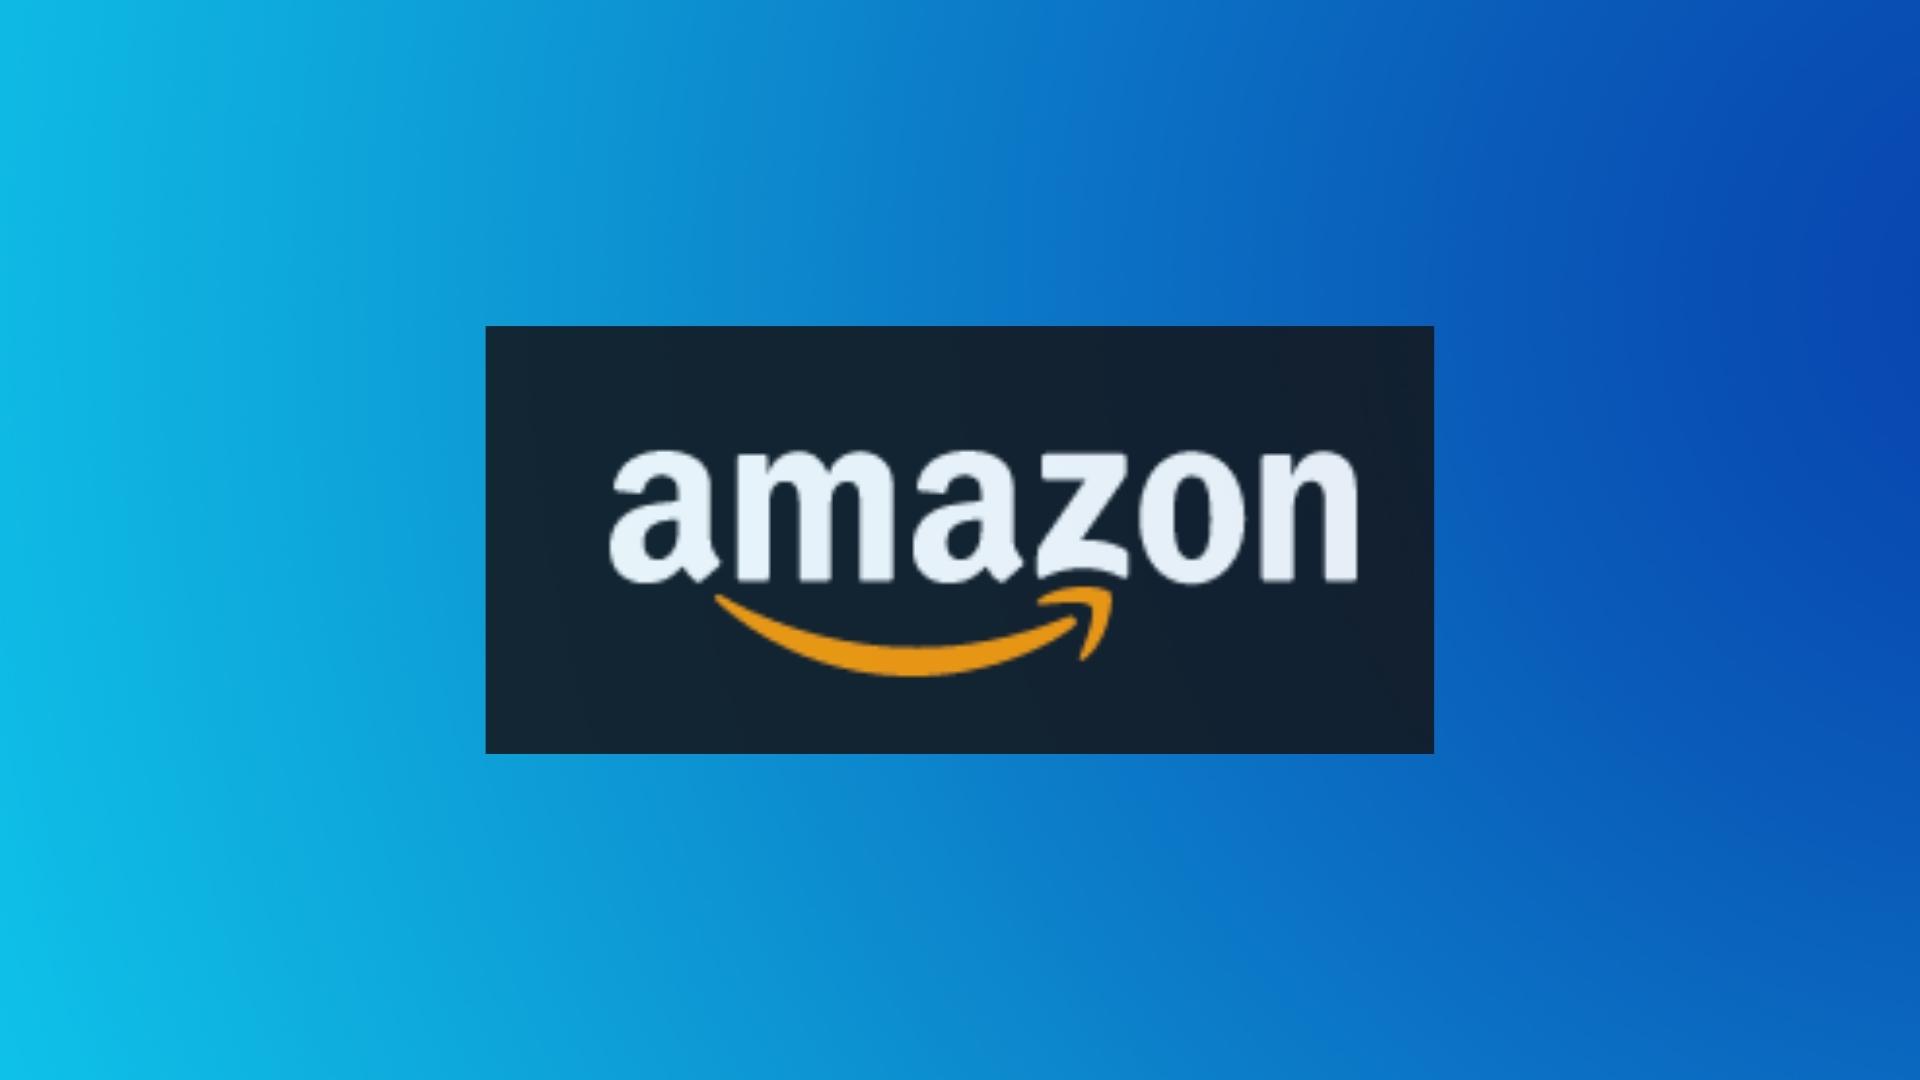 Amazon - Personalized Logo for Non-Prime Members